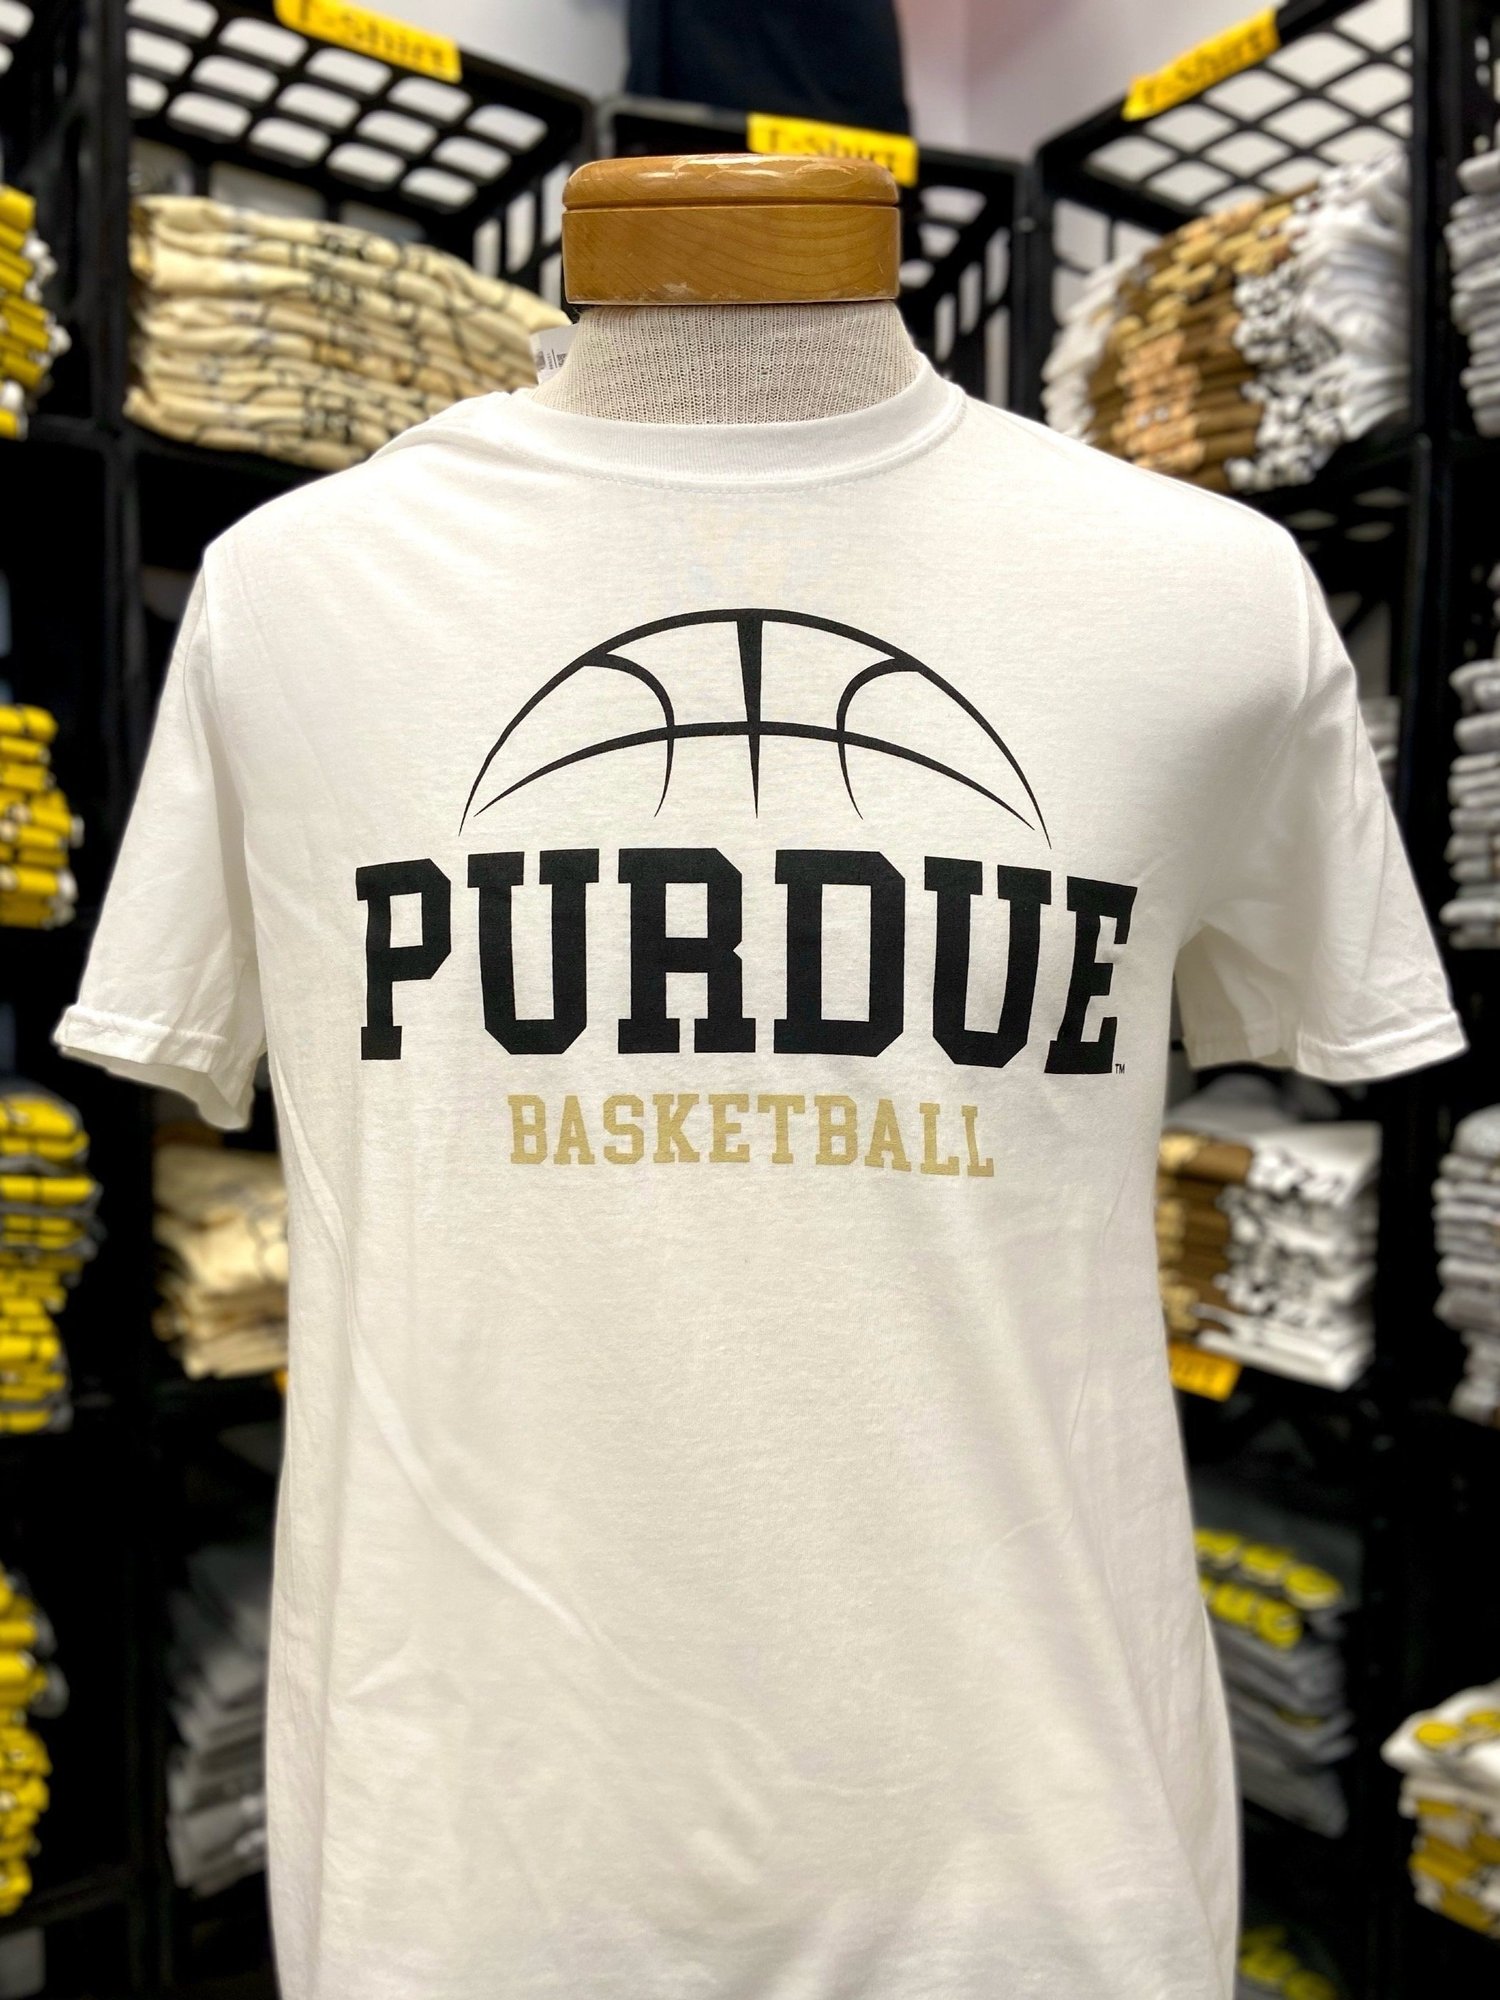 bijkeuken Woning eiwit Discount Den — Purdue Basketball T Shirts